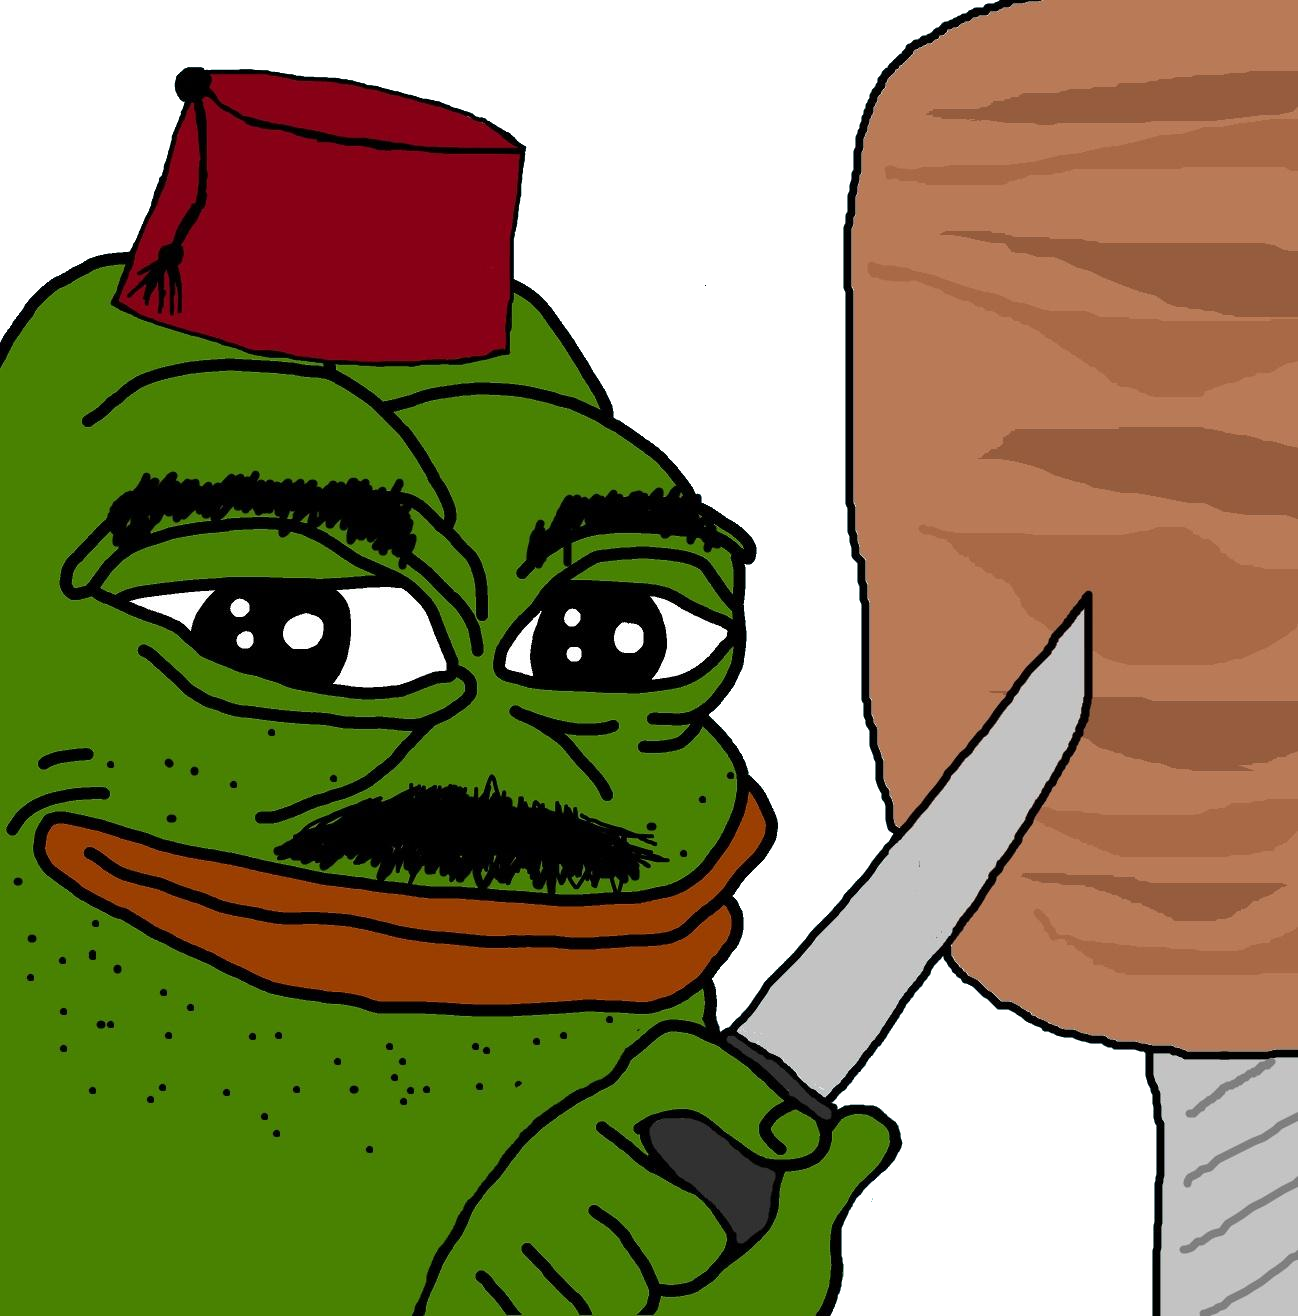 Pepe/apu a day - 441 kebab